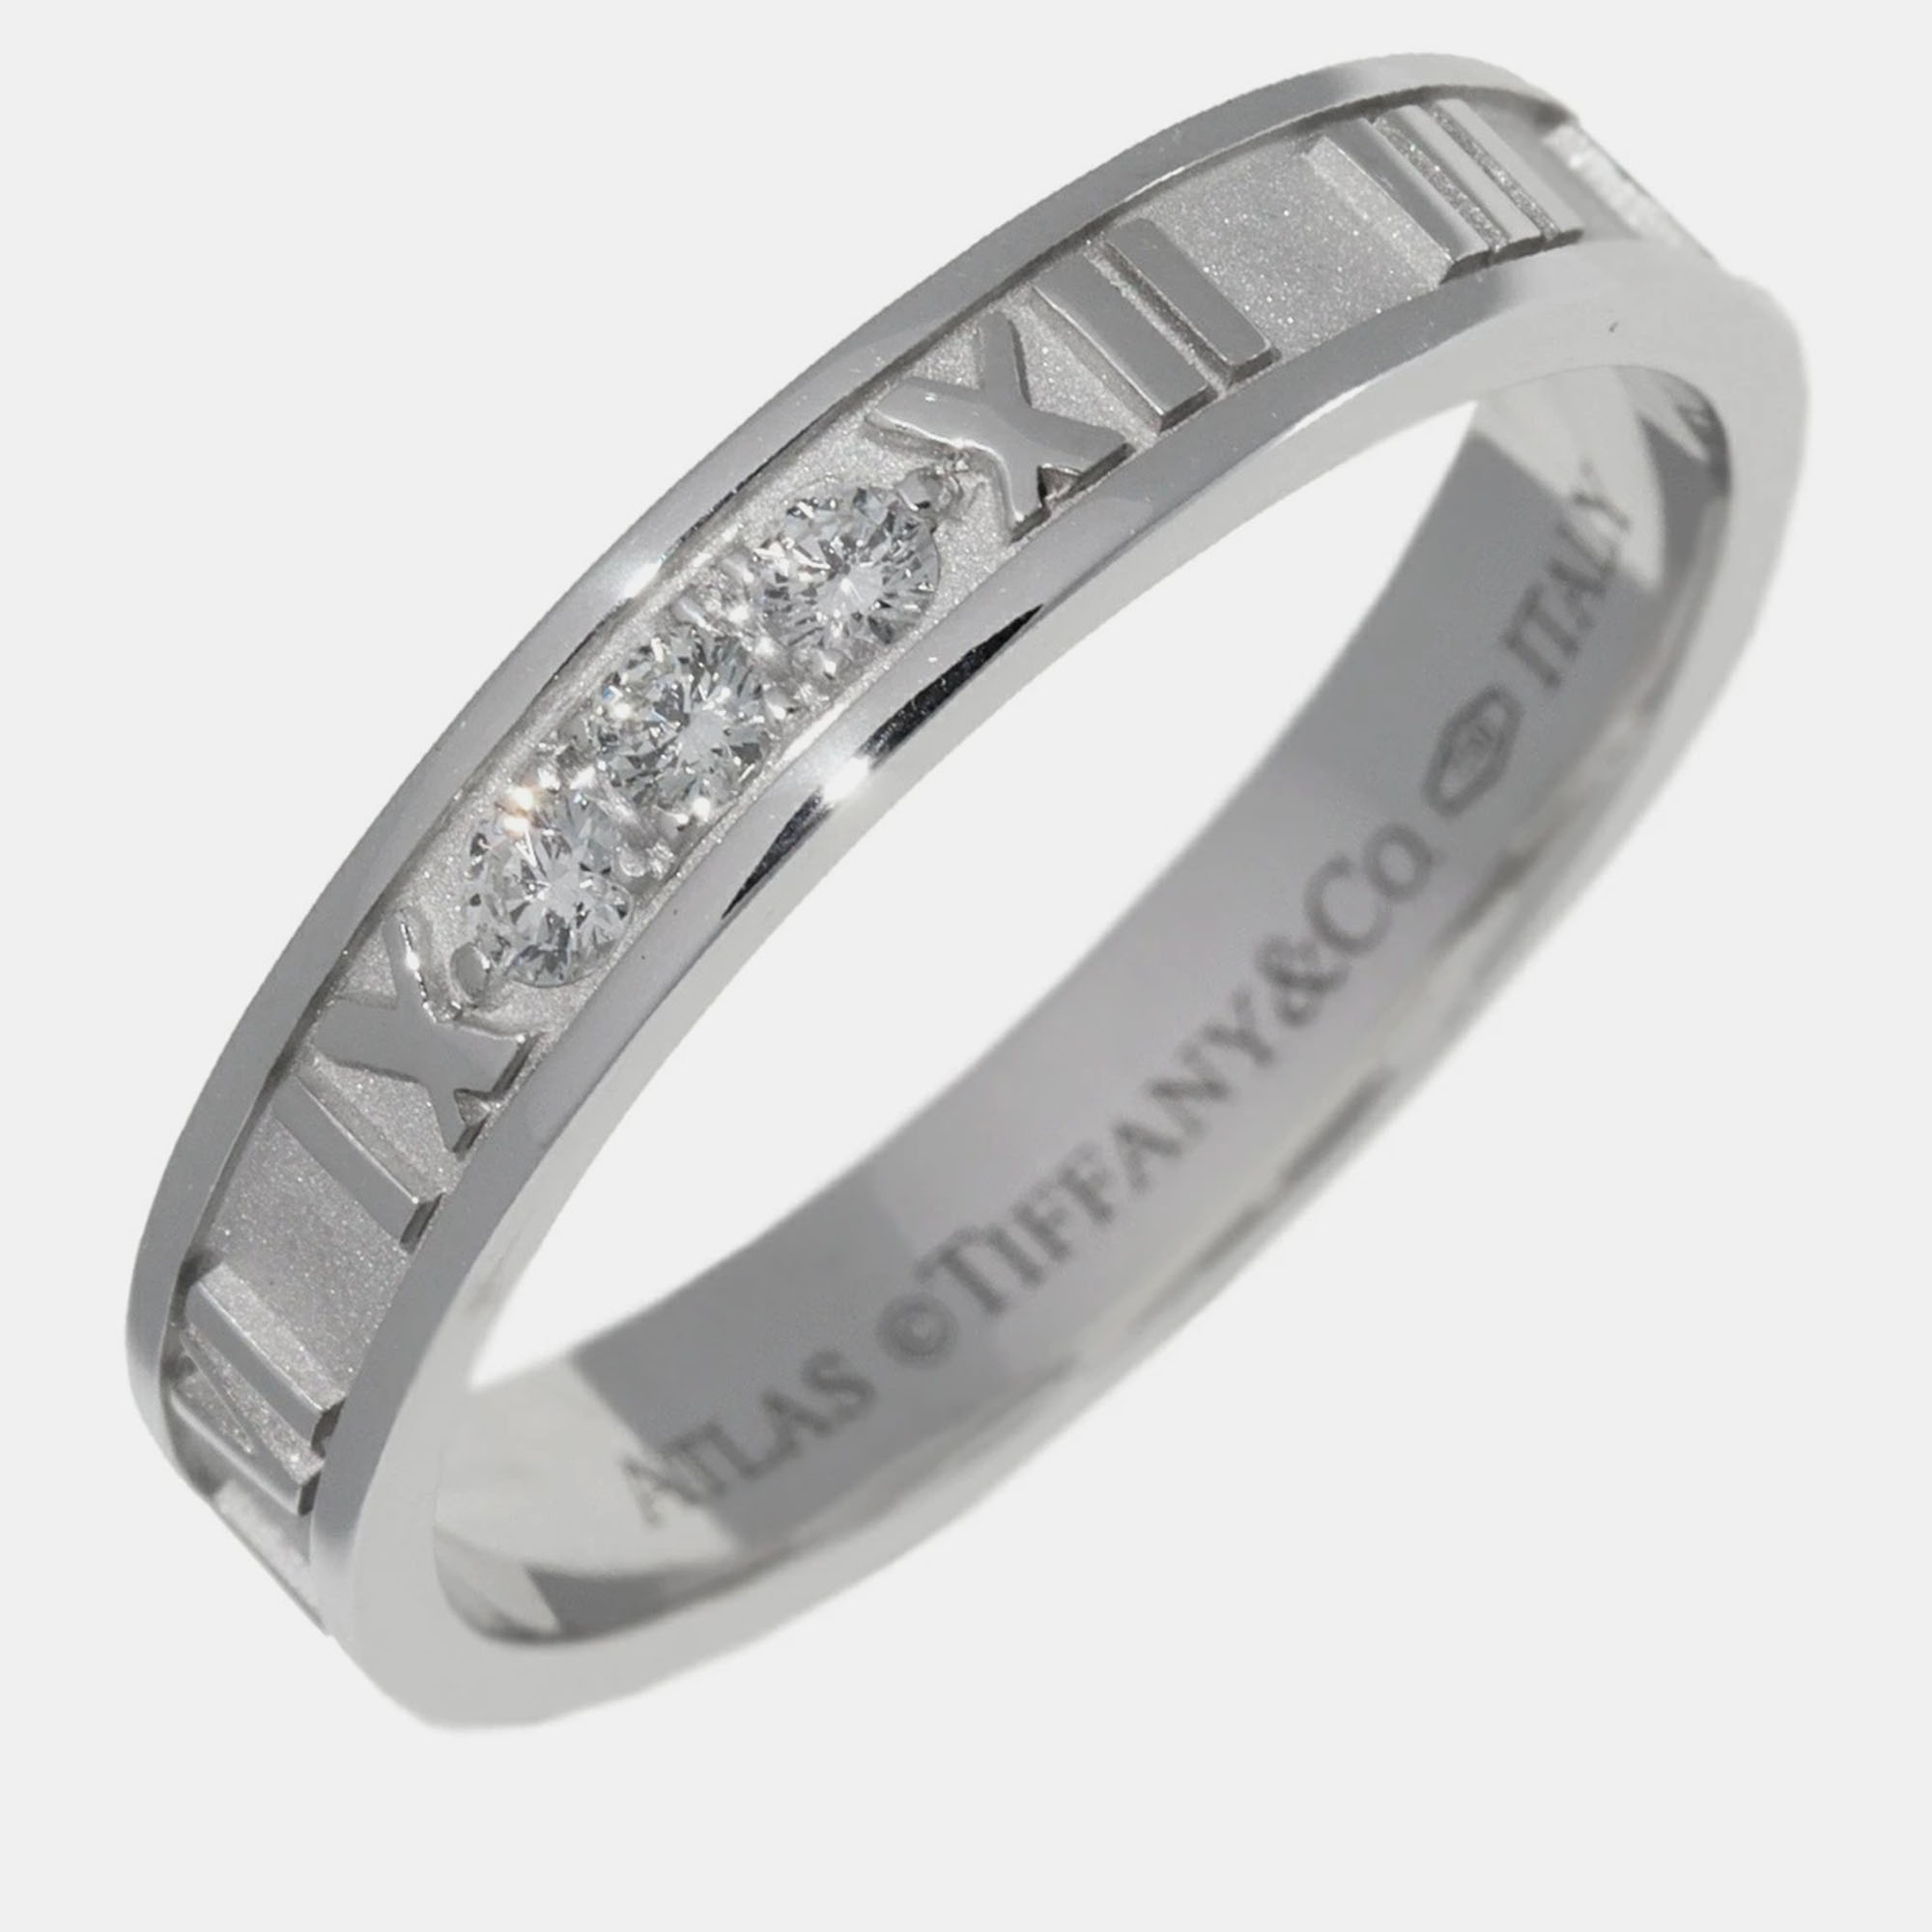 Tiffany & Co. Atlas 18K White Gold Diamond Ring EU 62